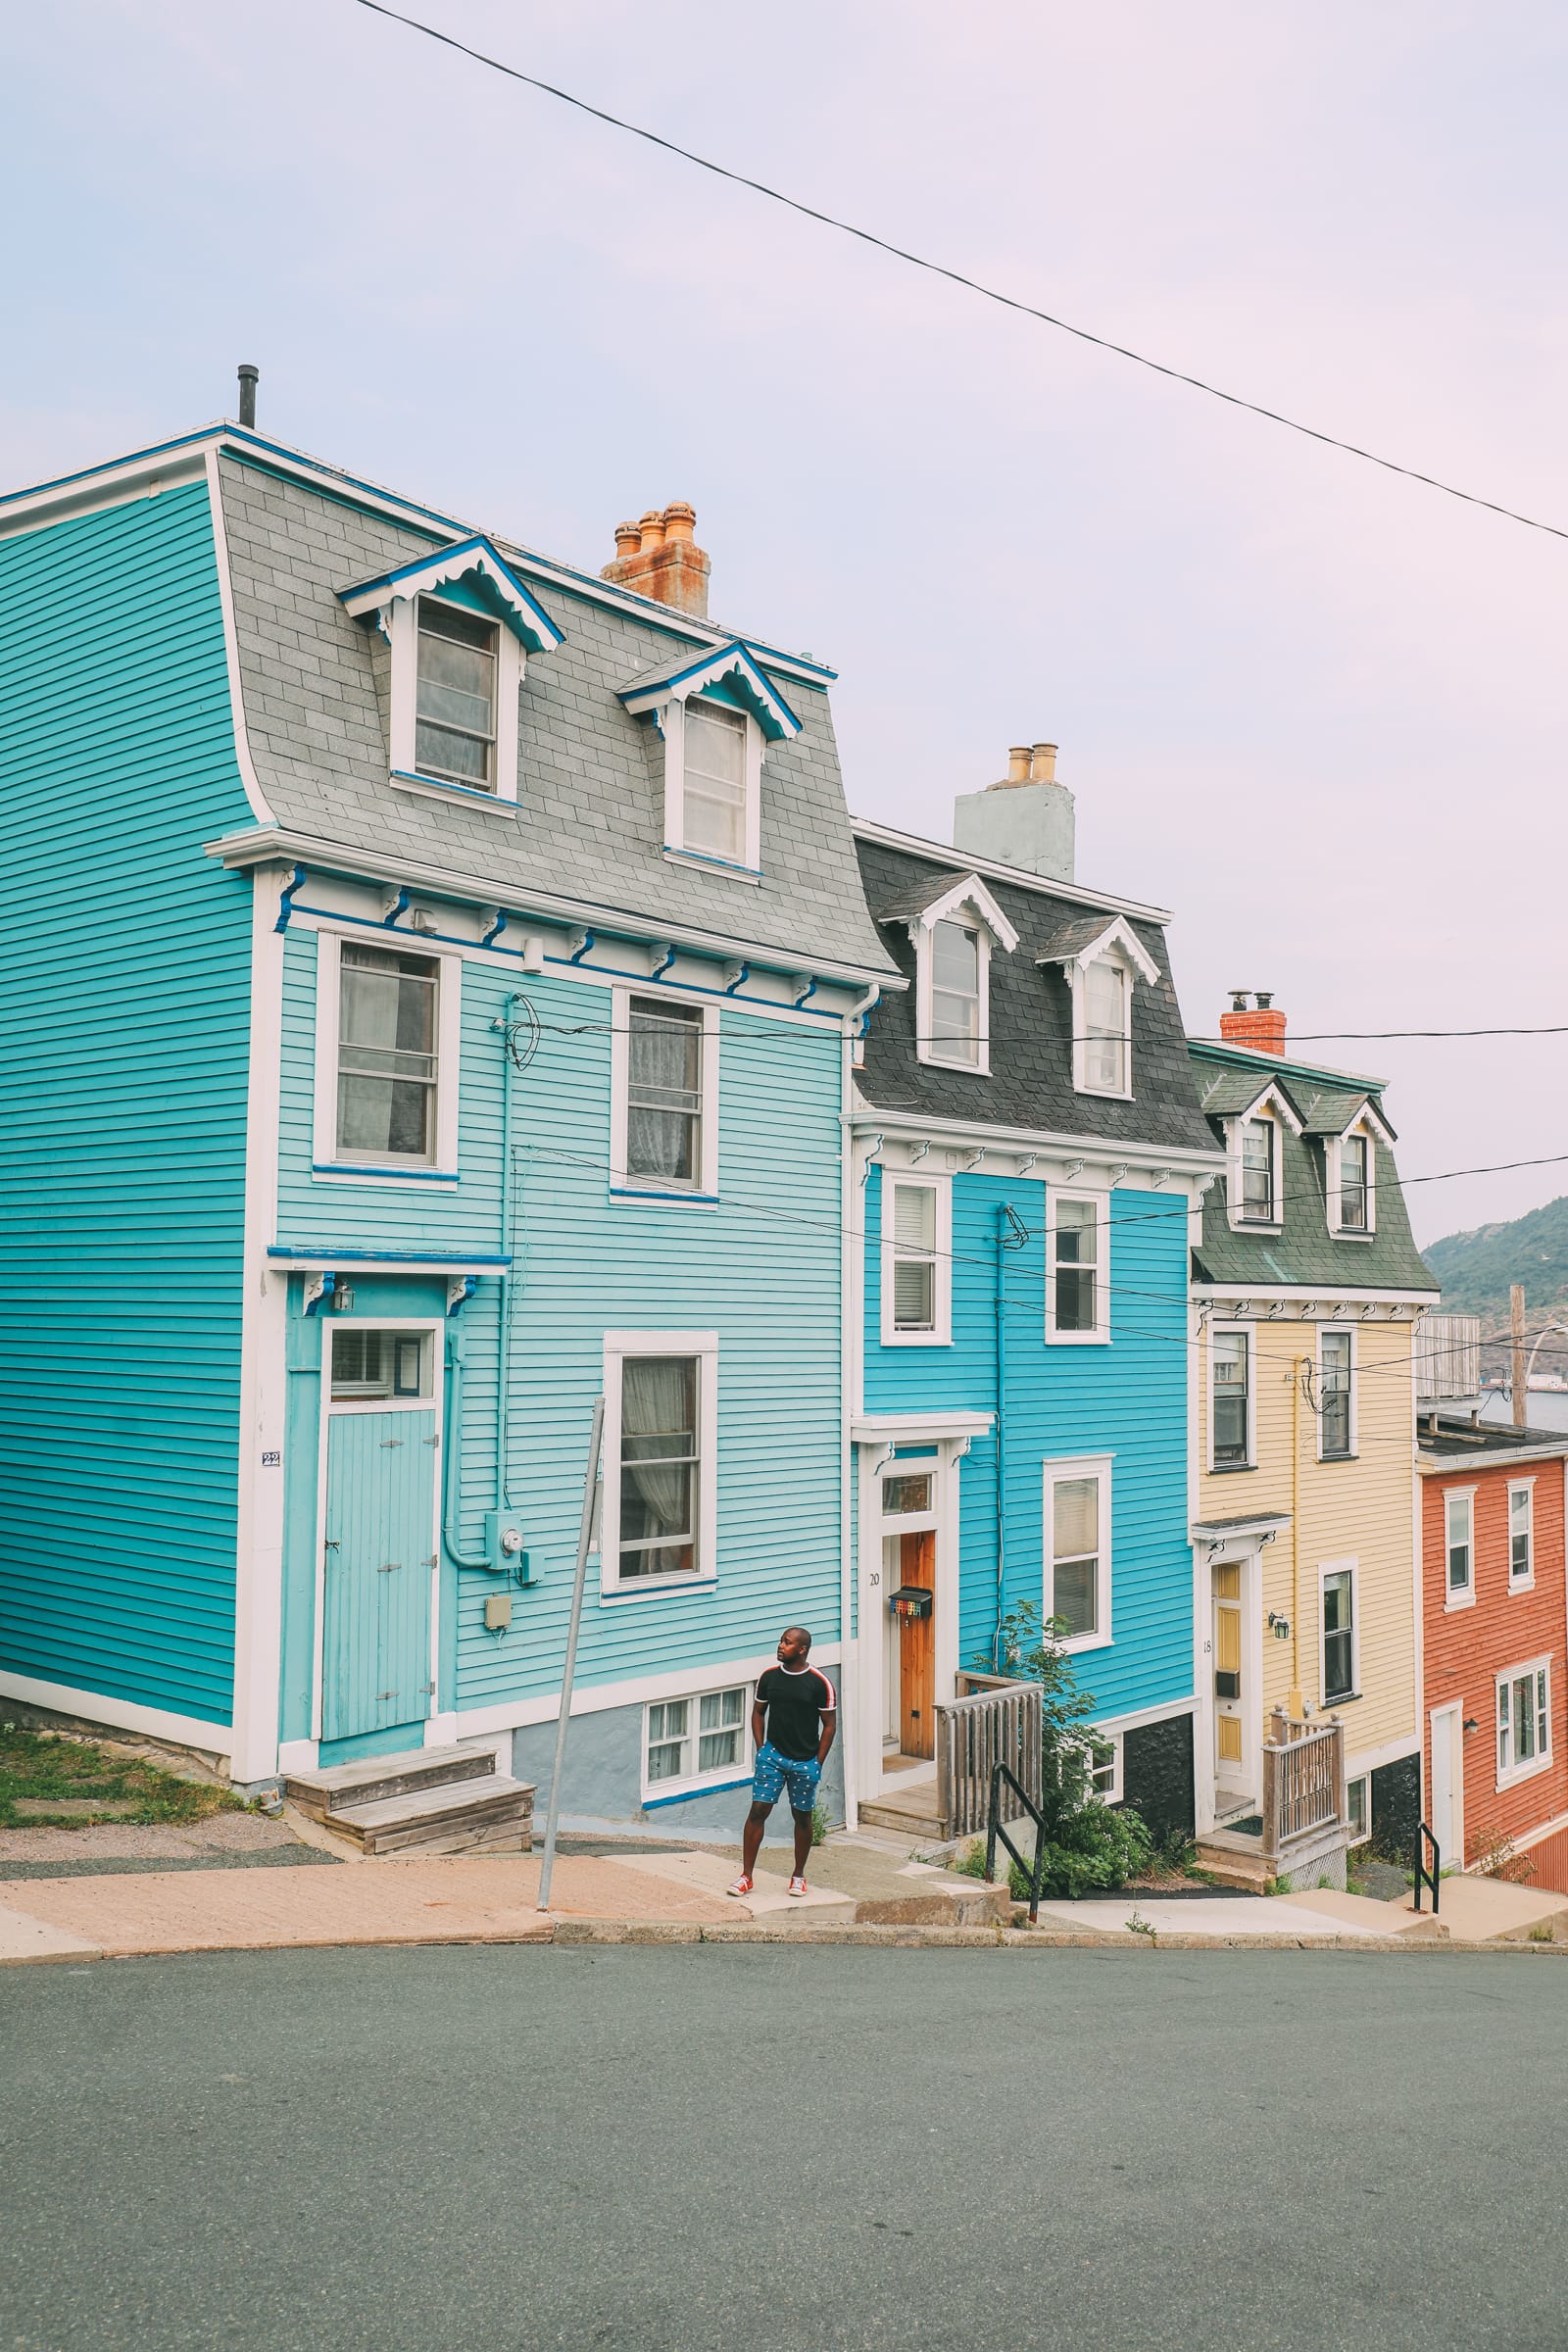 The Colourful Houses Of St John's, Newfoundland (8)